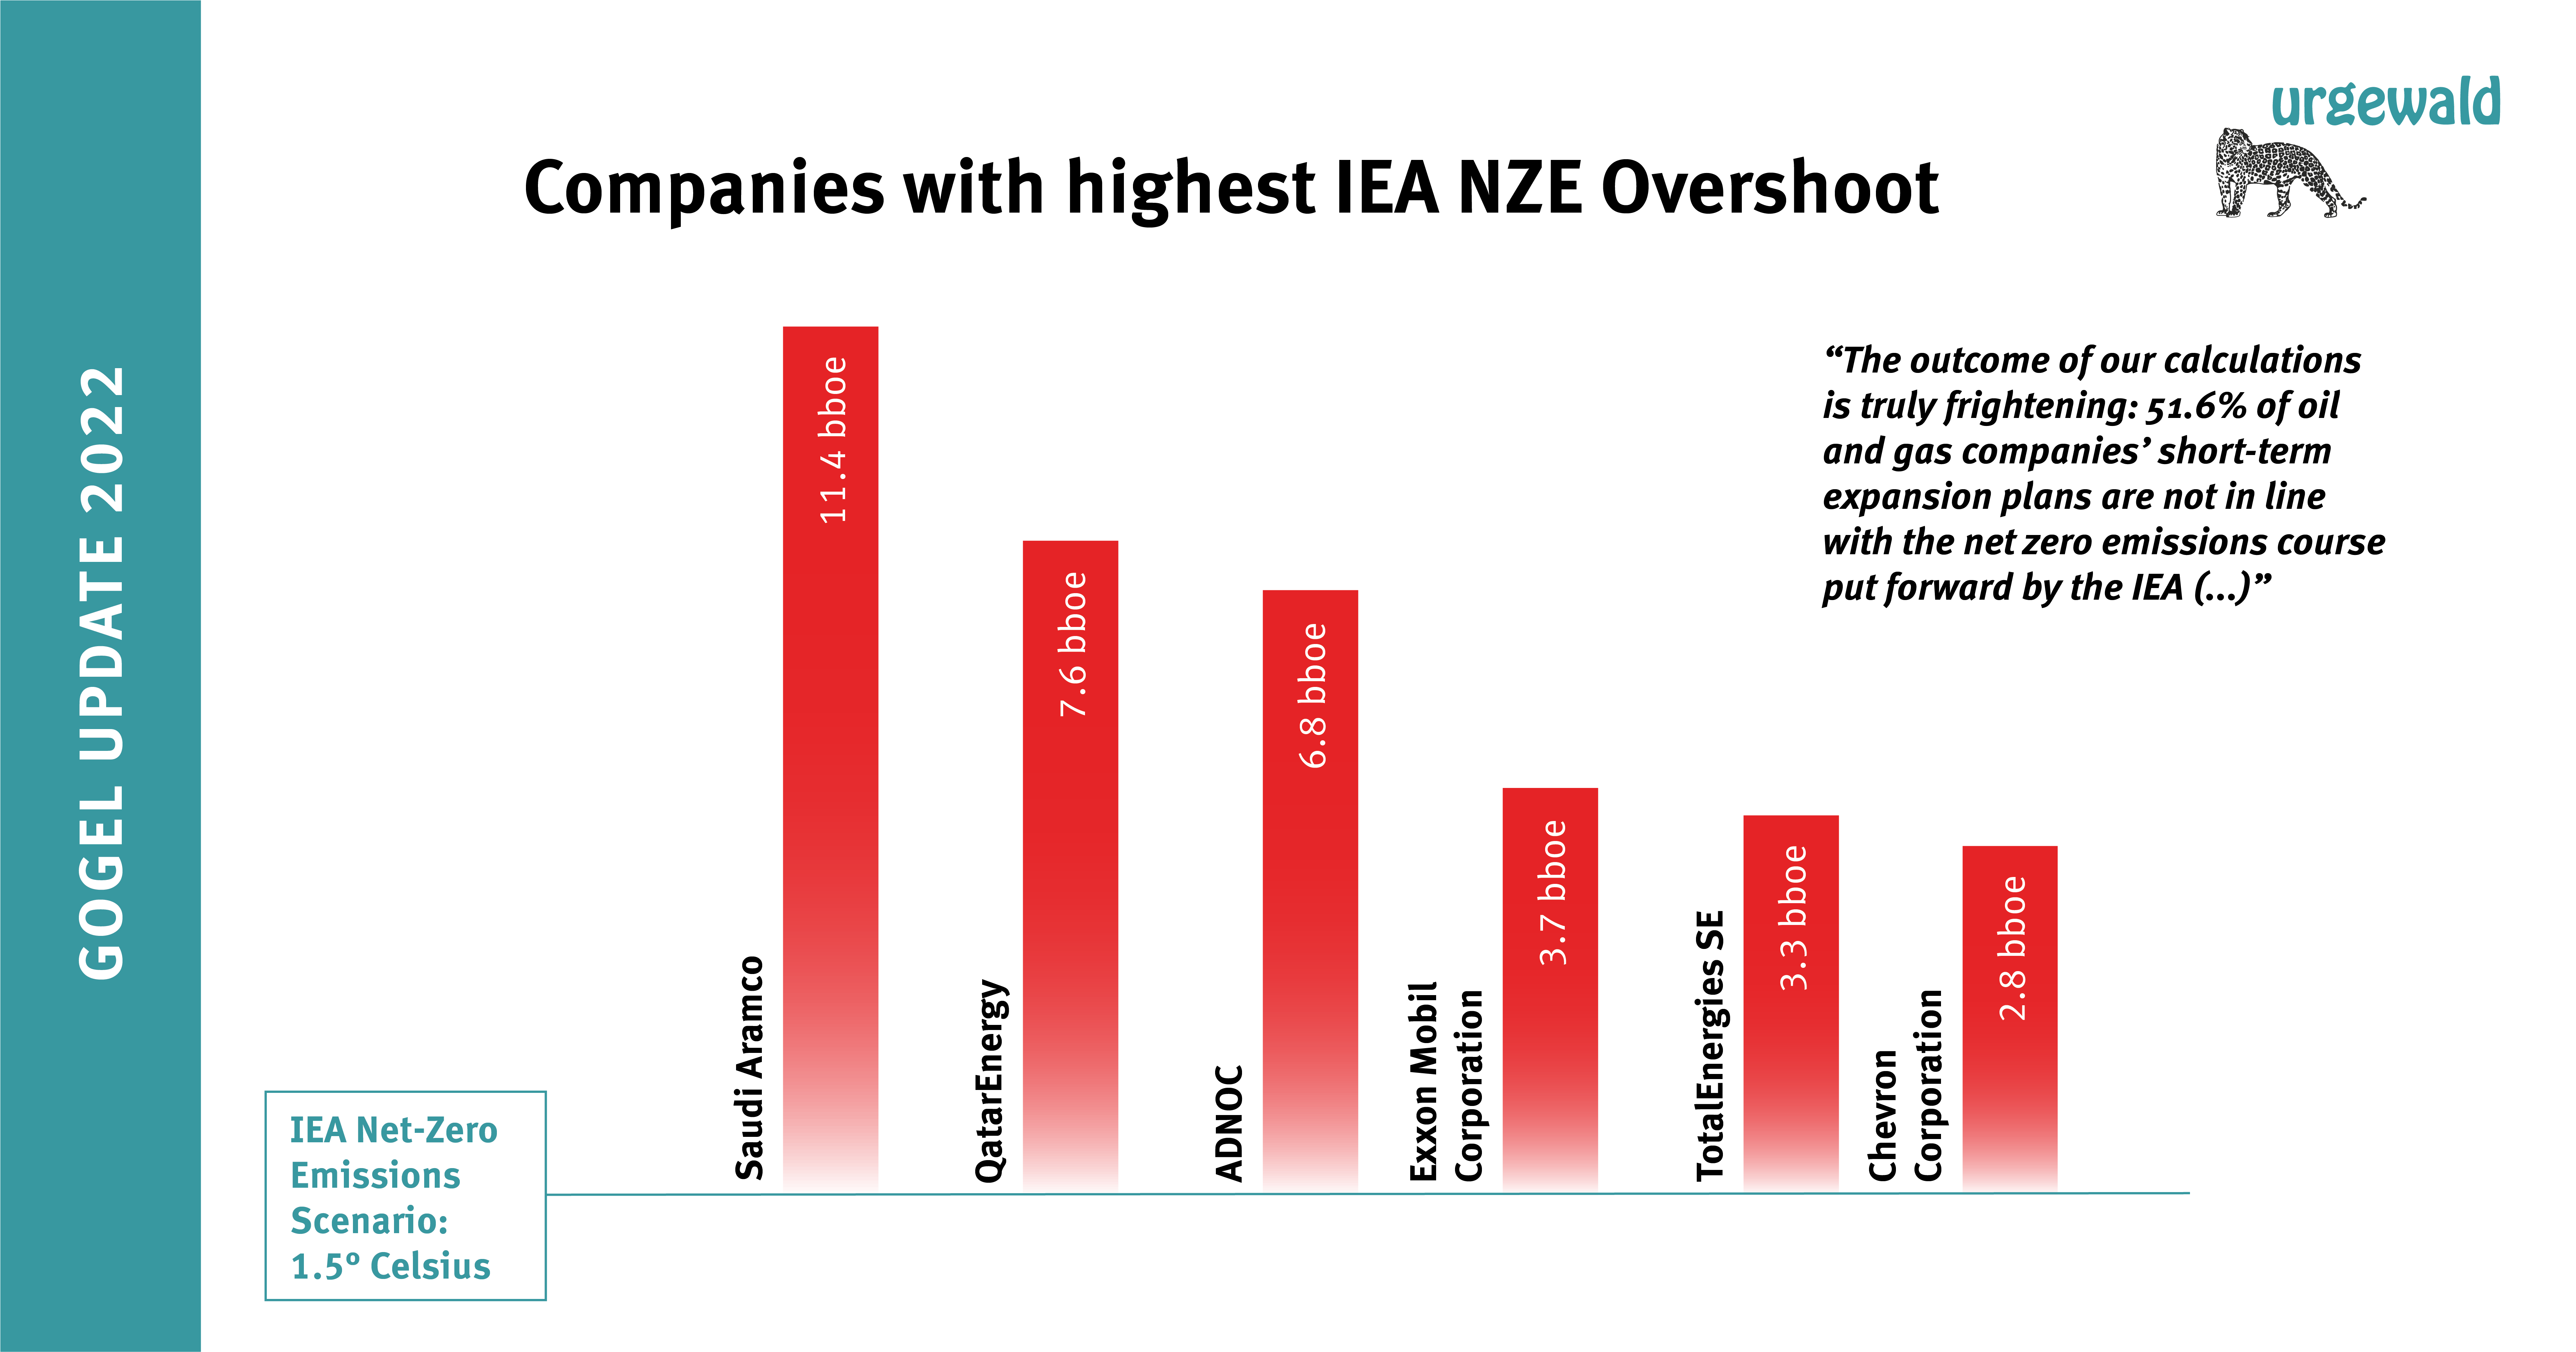 Companies with highest IEA NZE Overshoot